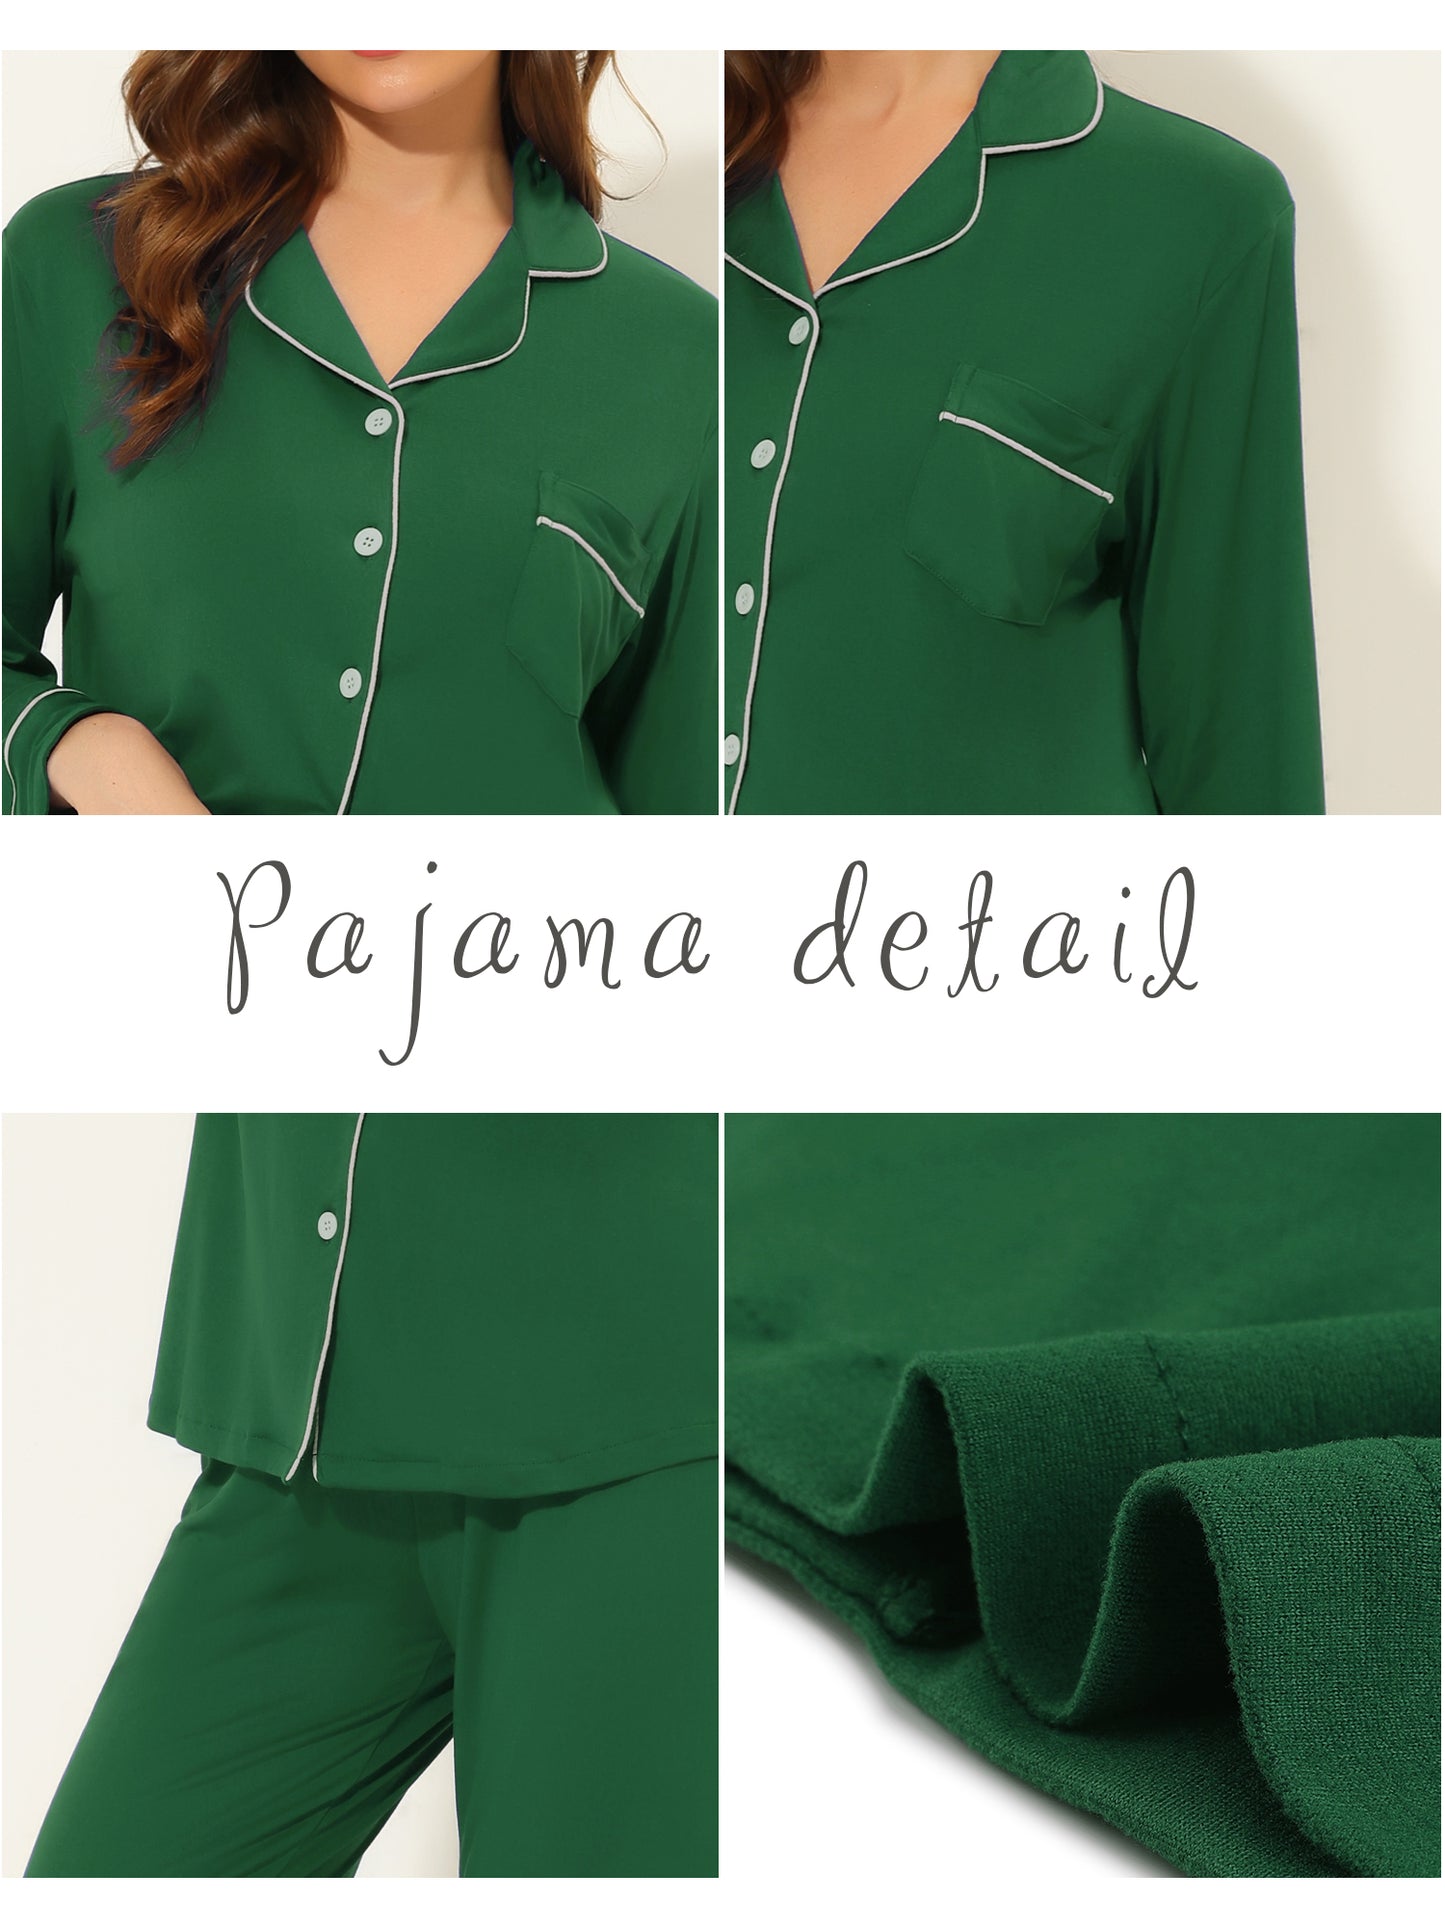 cheibear Pajama Sleep Shirt Nightwear Sleepwear Lounge Modal Pj Sets Green